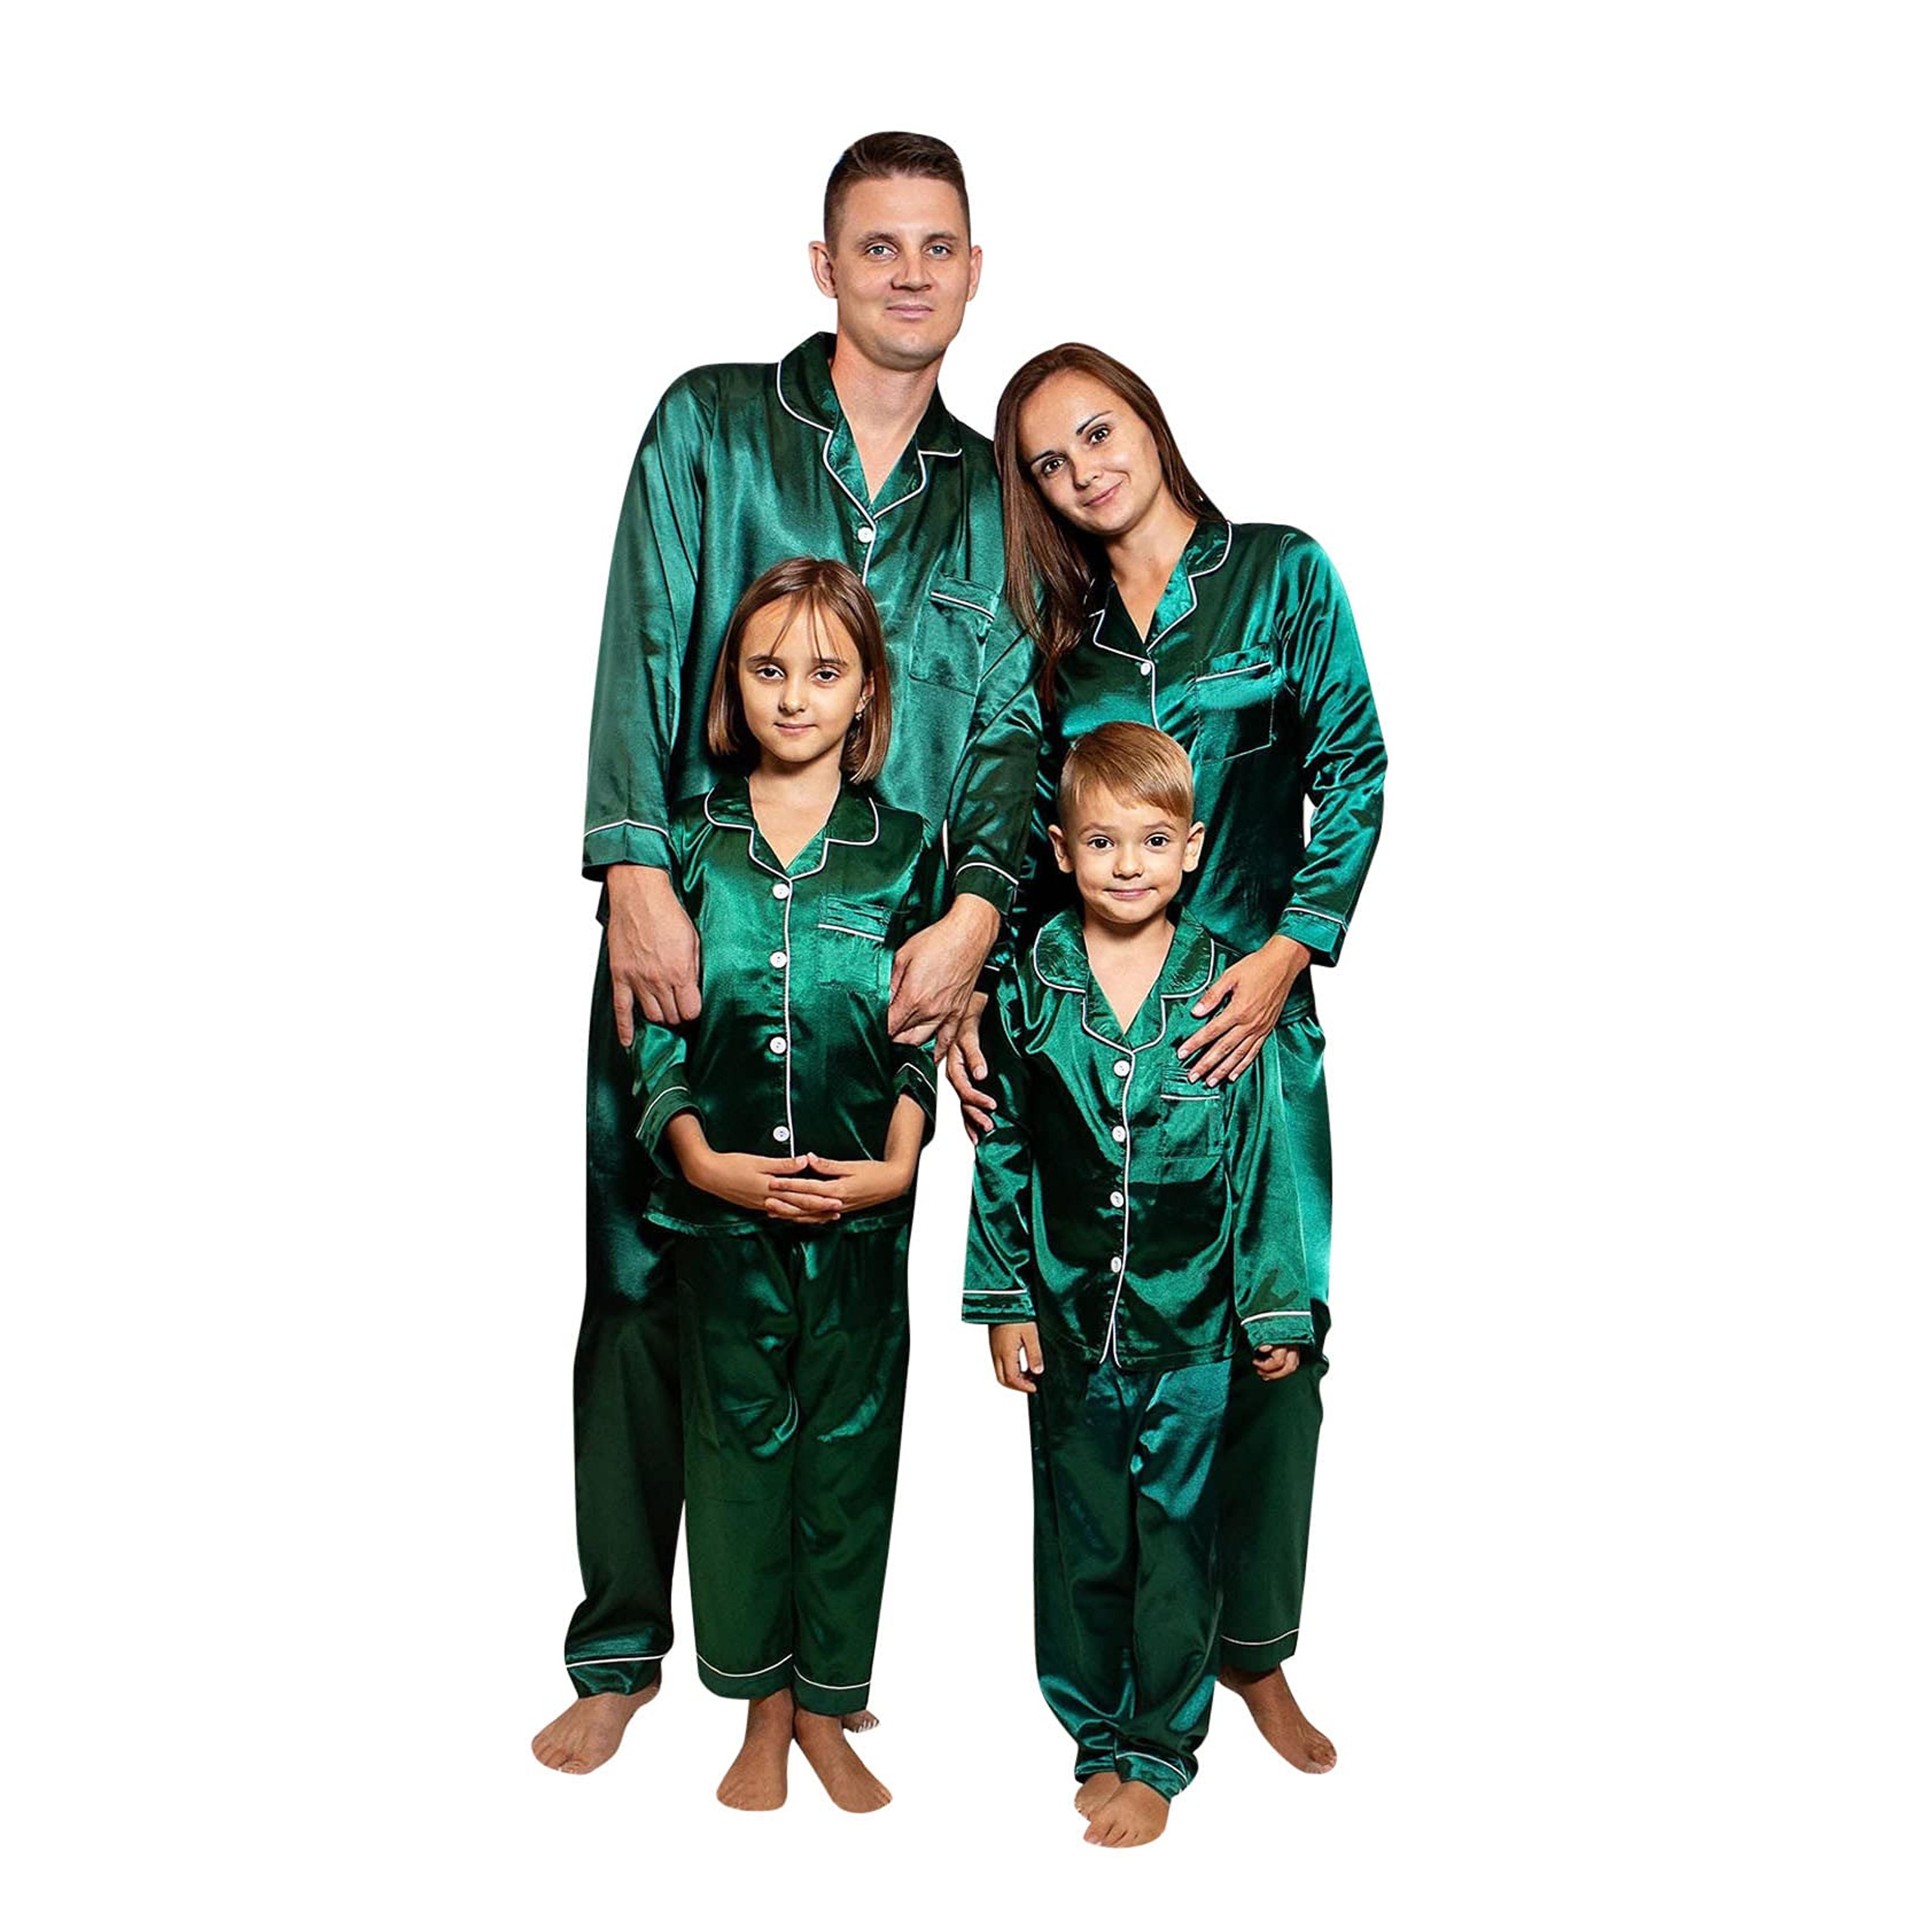 Family Pajamas Matching Sets Plain Christmas pjs for Women Kids Nightwear Xmas Loungewear Couples Sleepwear